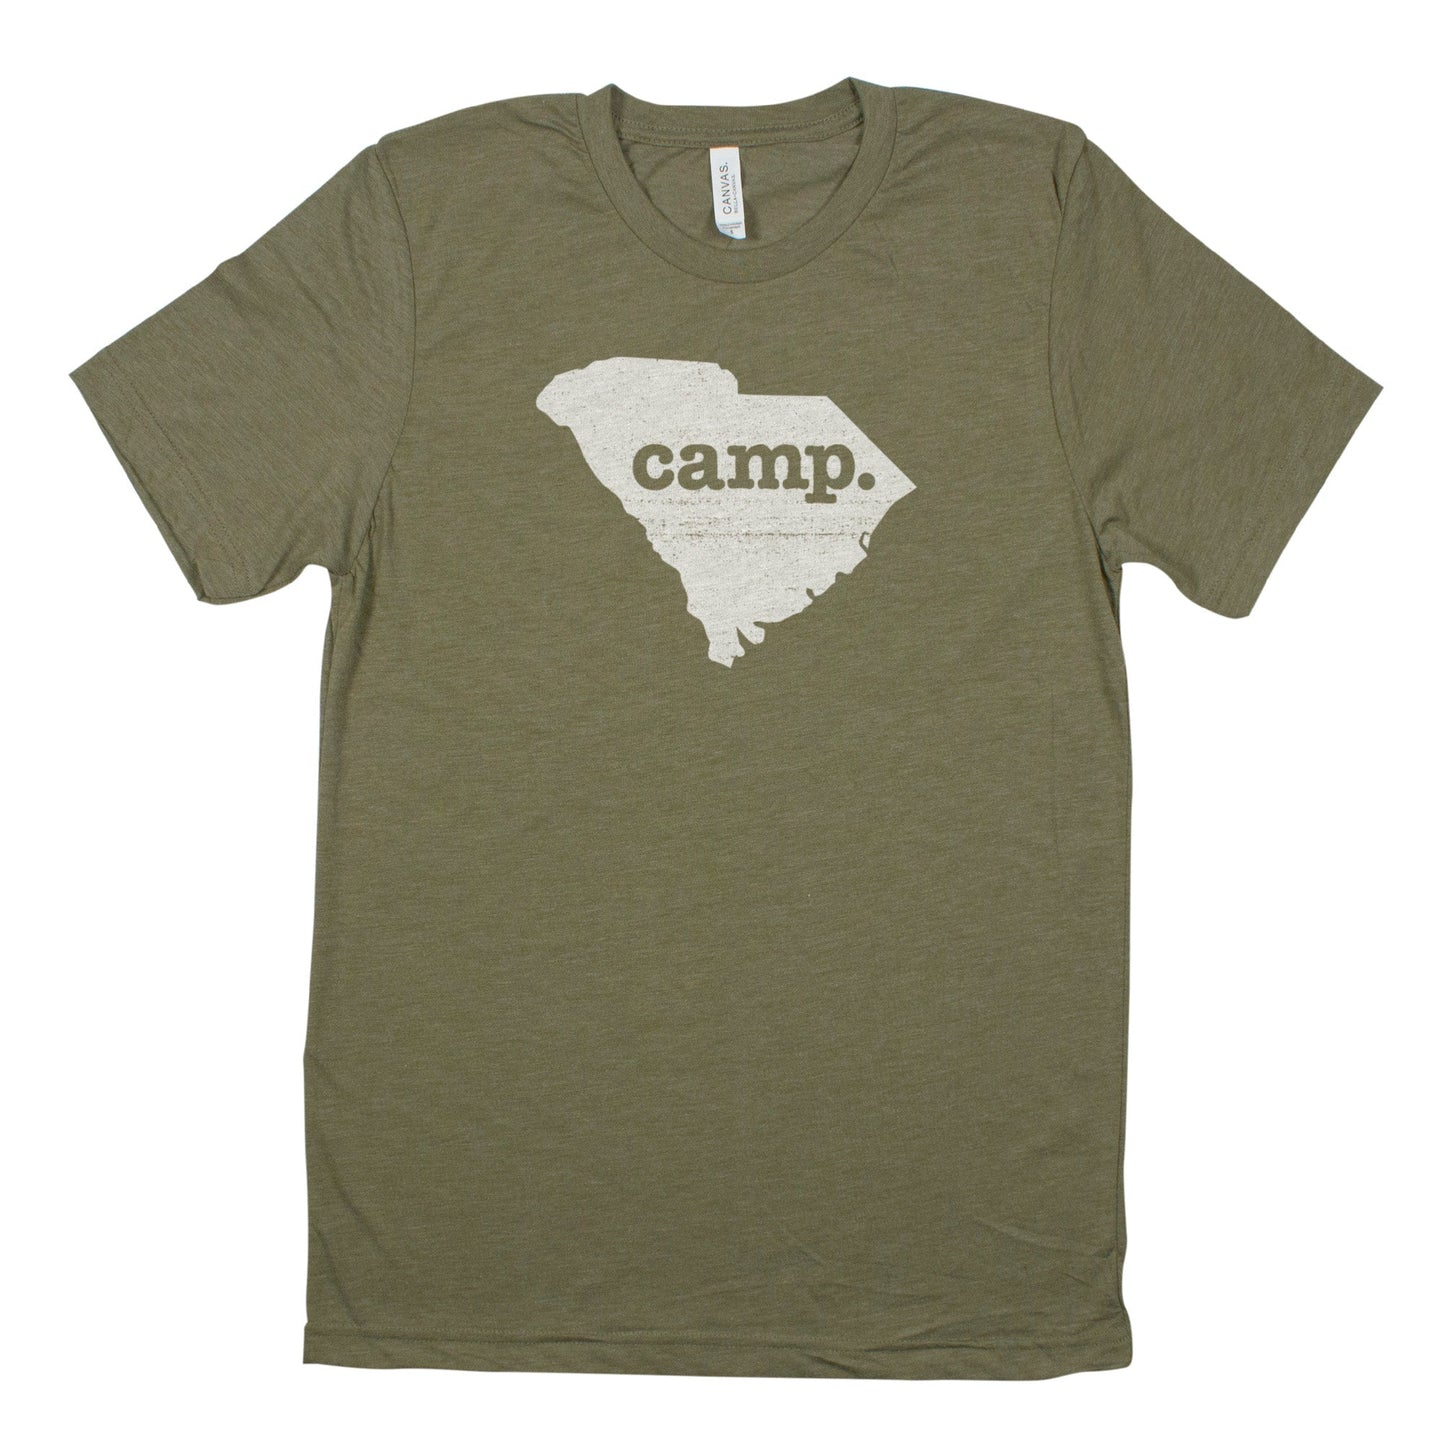 camp. Men's Unisex T-Shirt - South Carolina